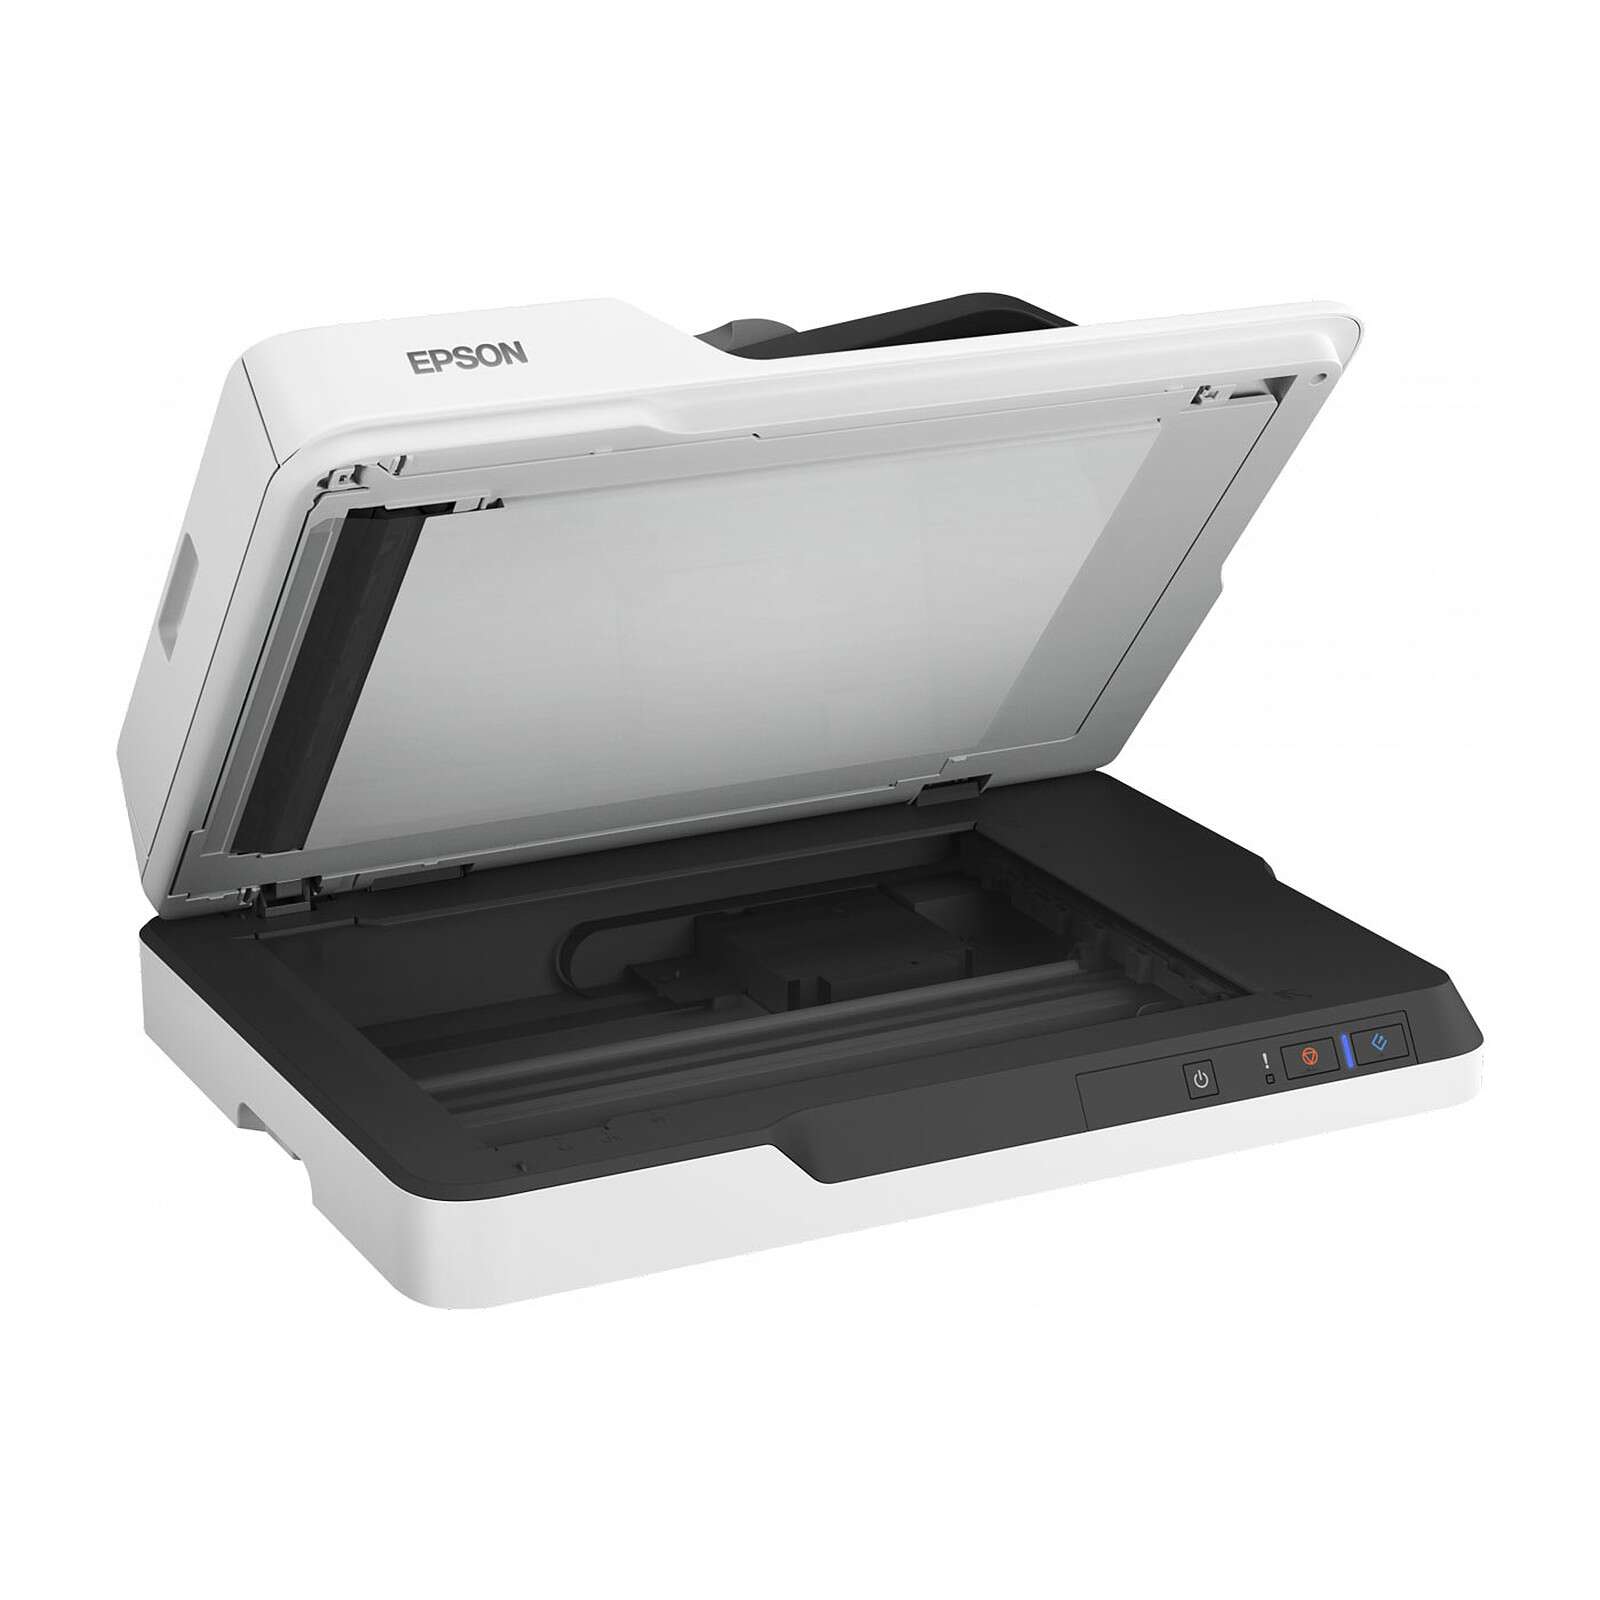 Epson WorkForce DS-6500 - Scanner de documents - Recto-verso - A4